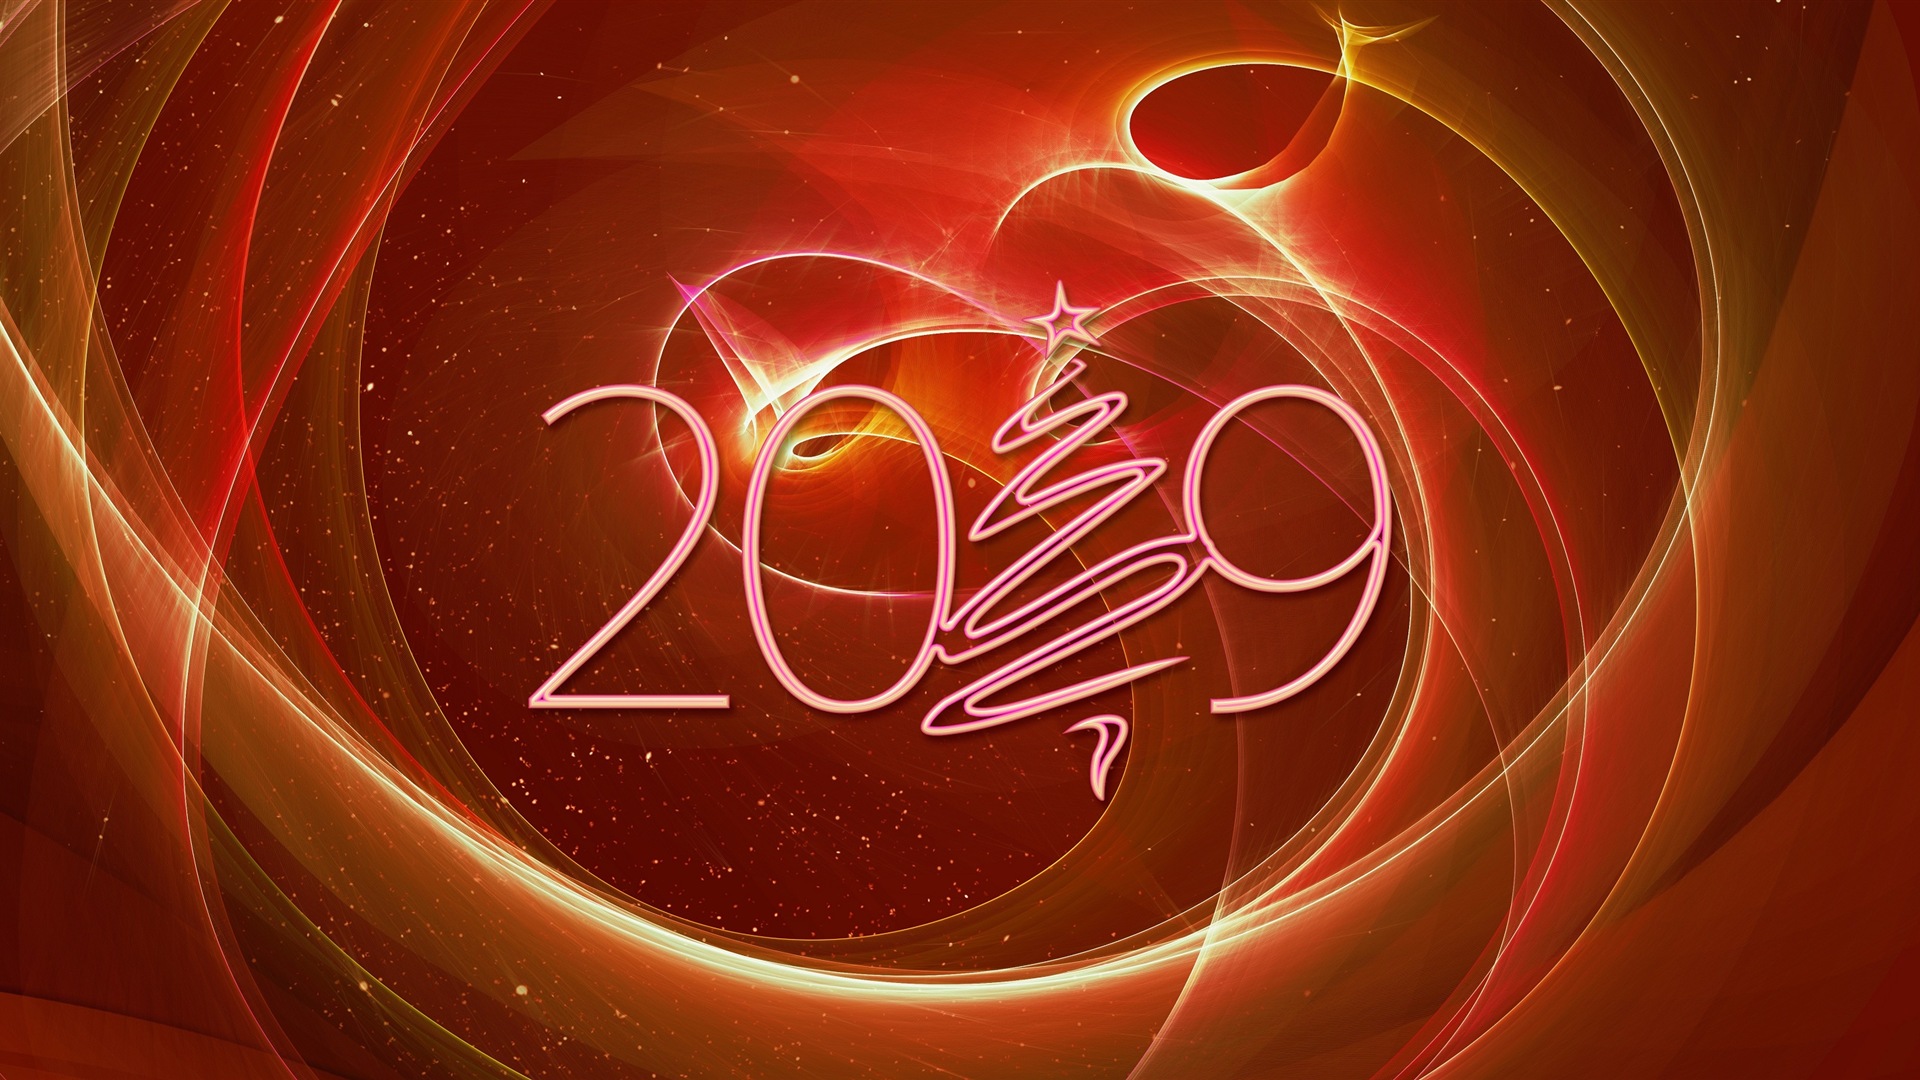 Frohes neues Jahr 2019 HD Wallpaper #4 - 1920x1080